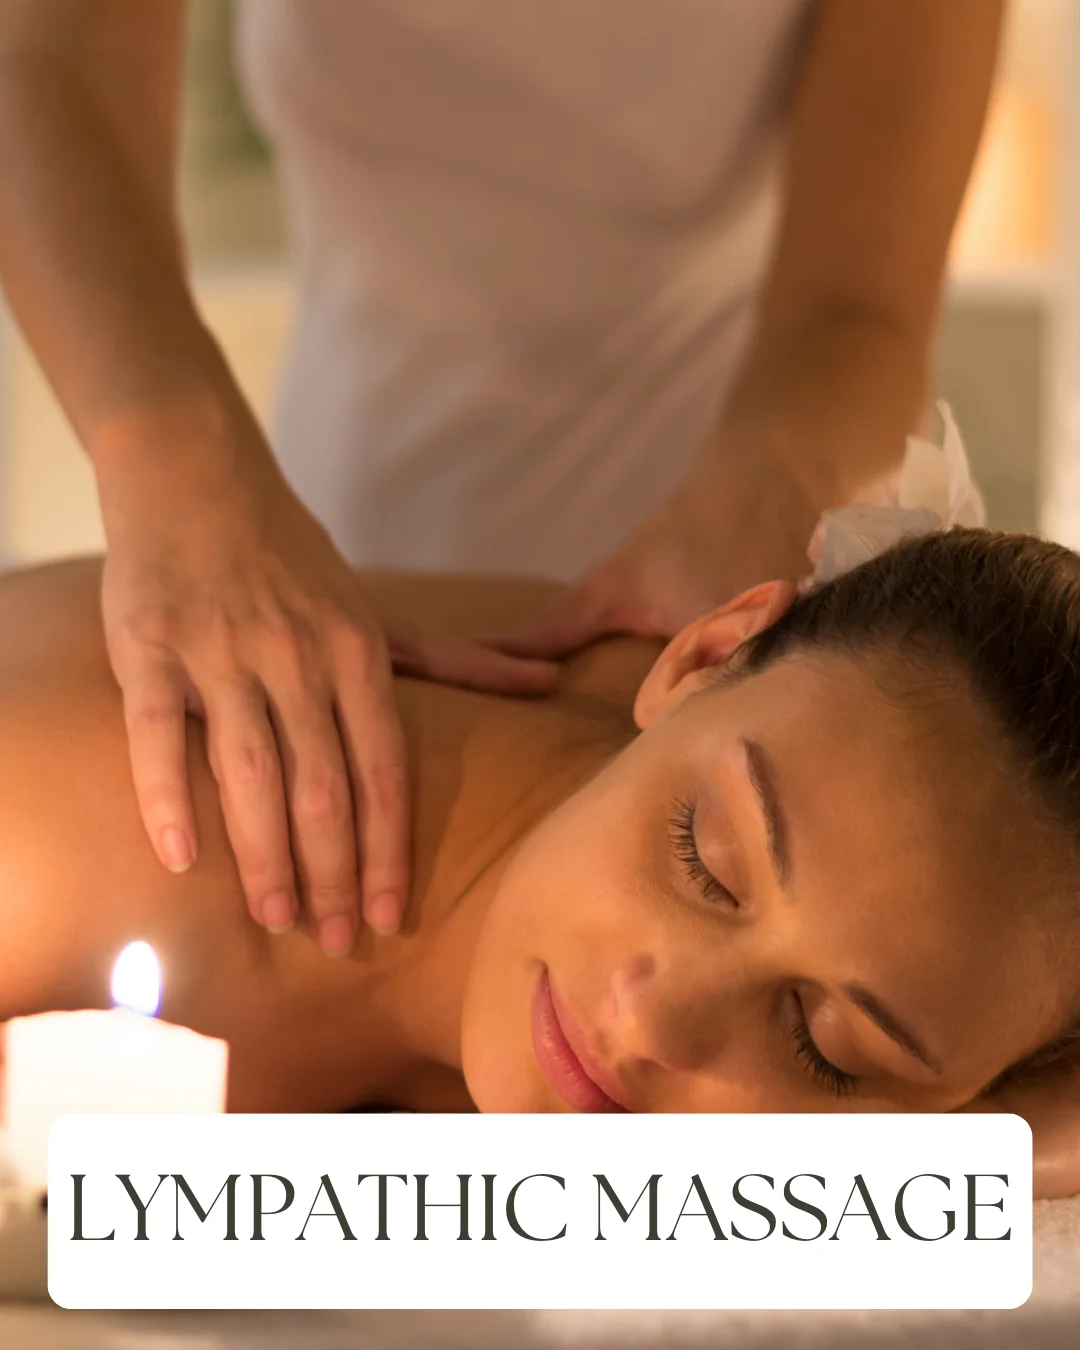 23. Lymphatic Massage